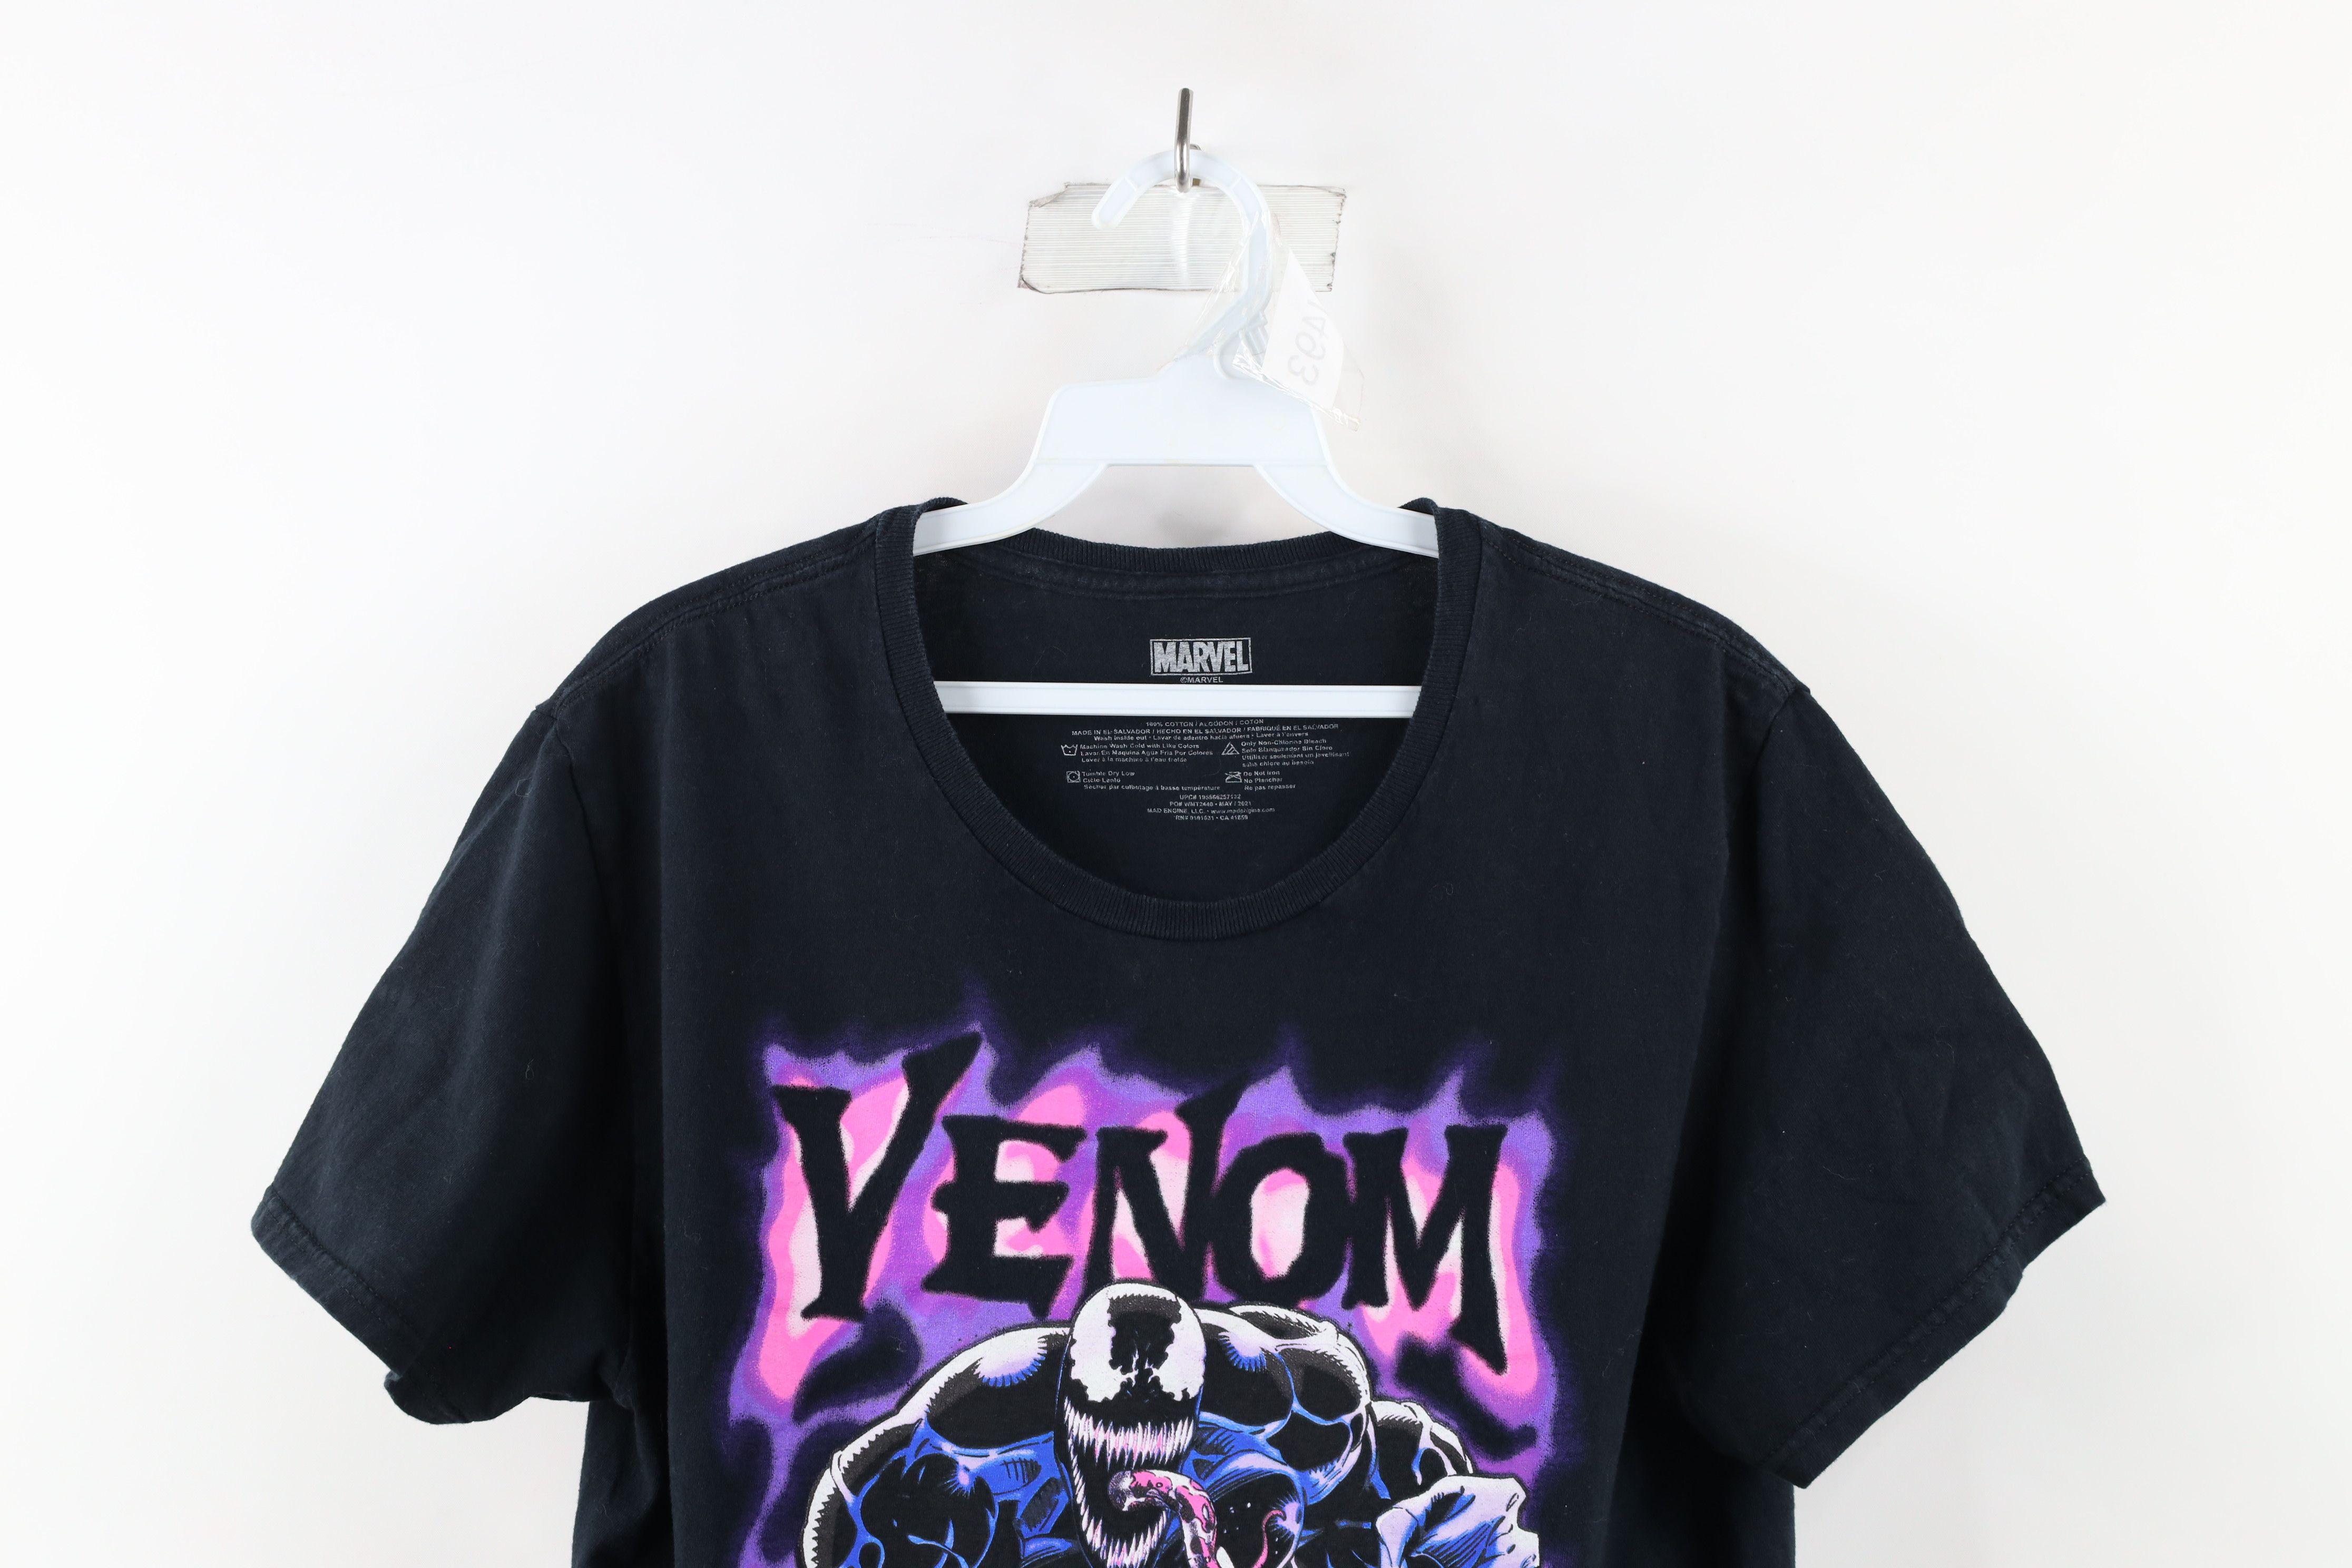 Vintage Marvel Comics Spell Out Venom Spiderman T-Shirt Black Size US M / EU 48-50 / 2 - 2 Preview